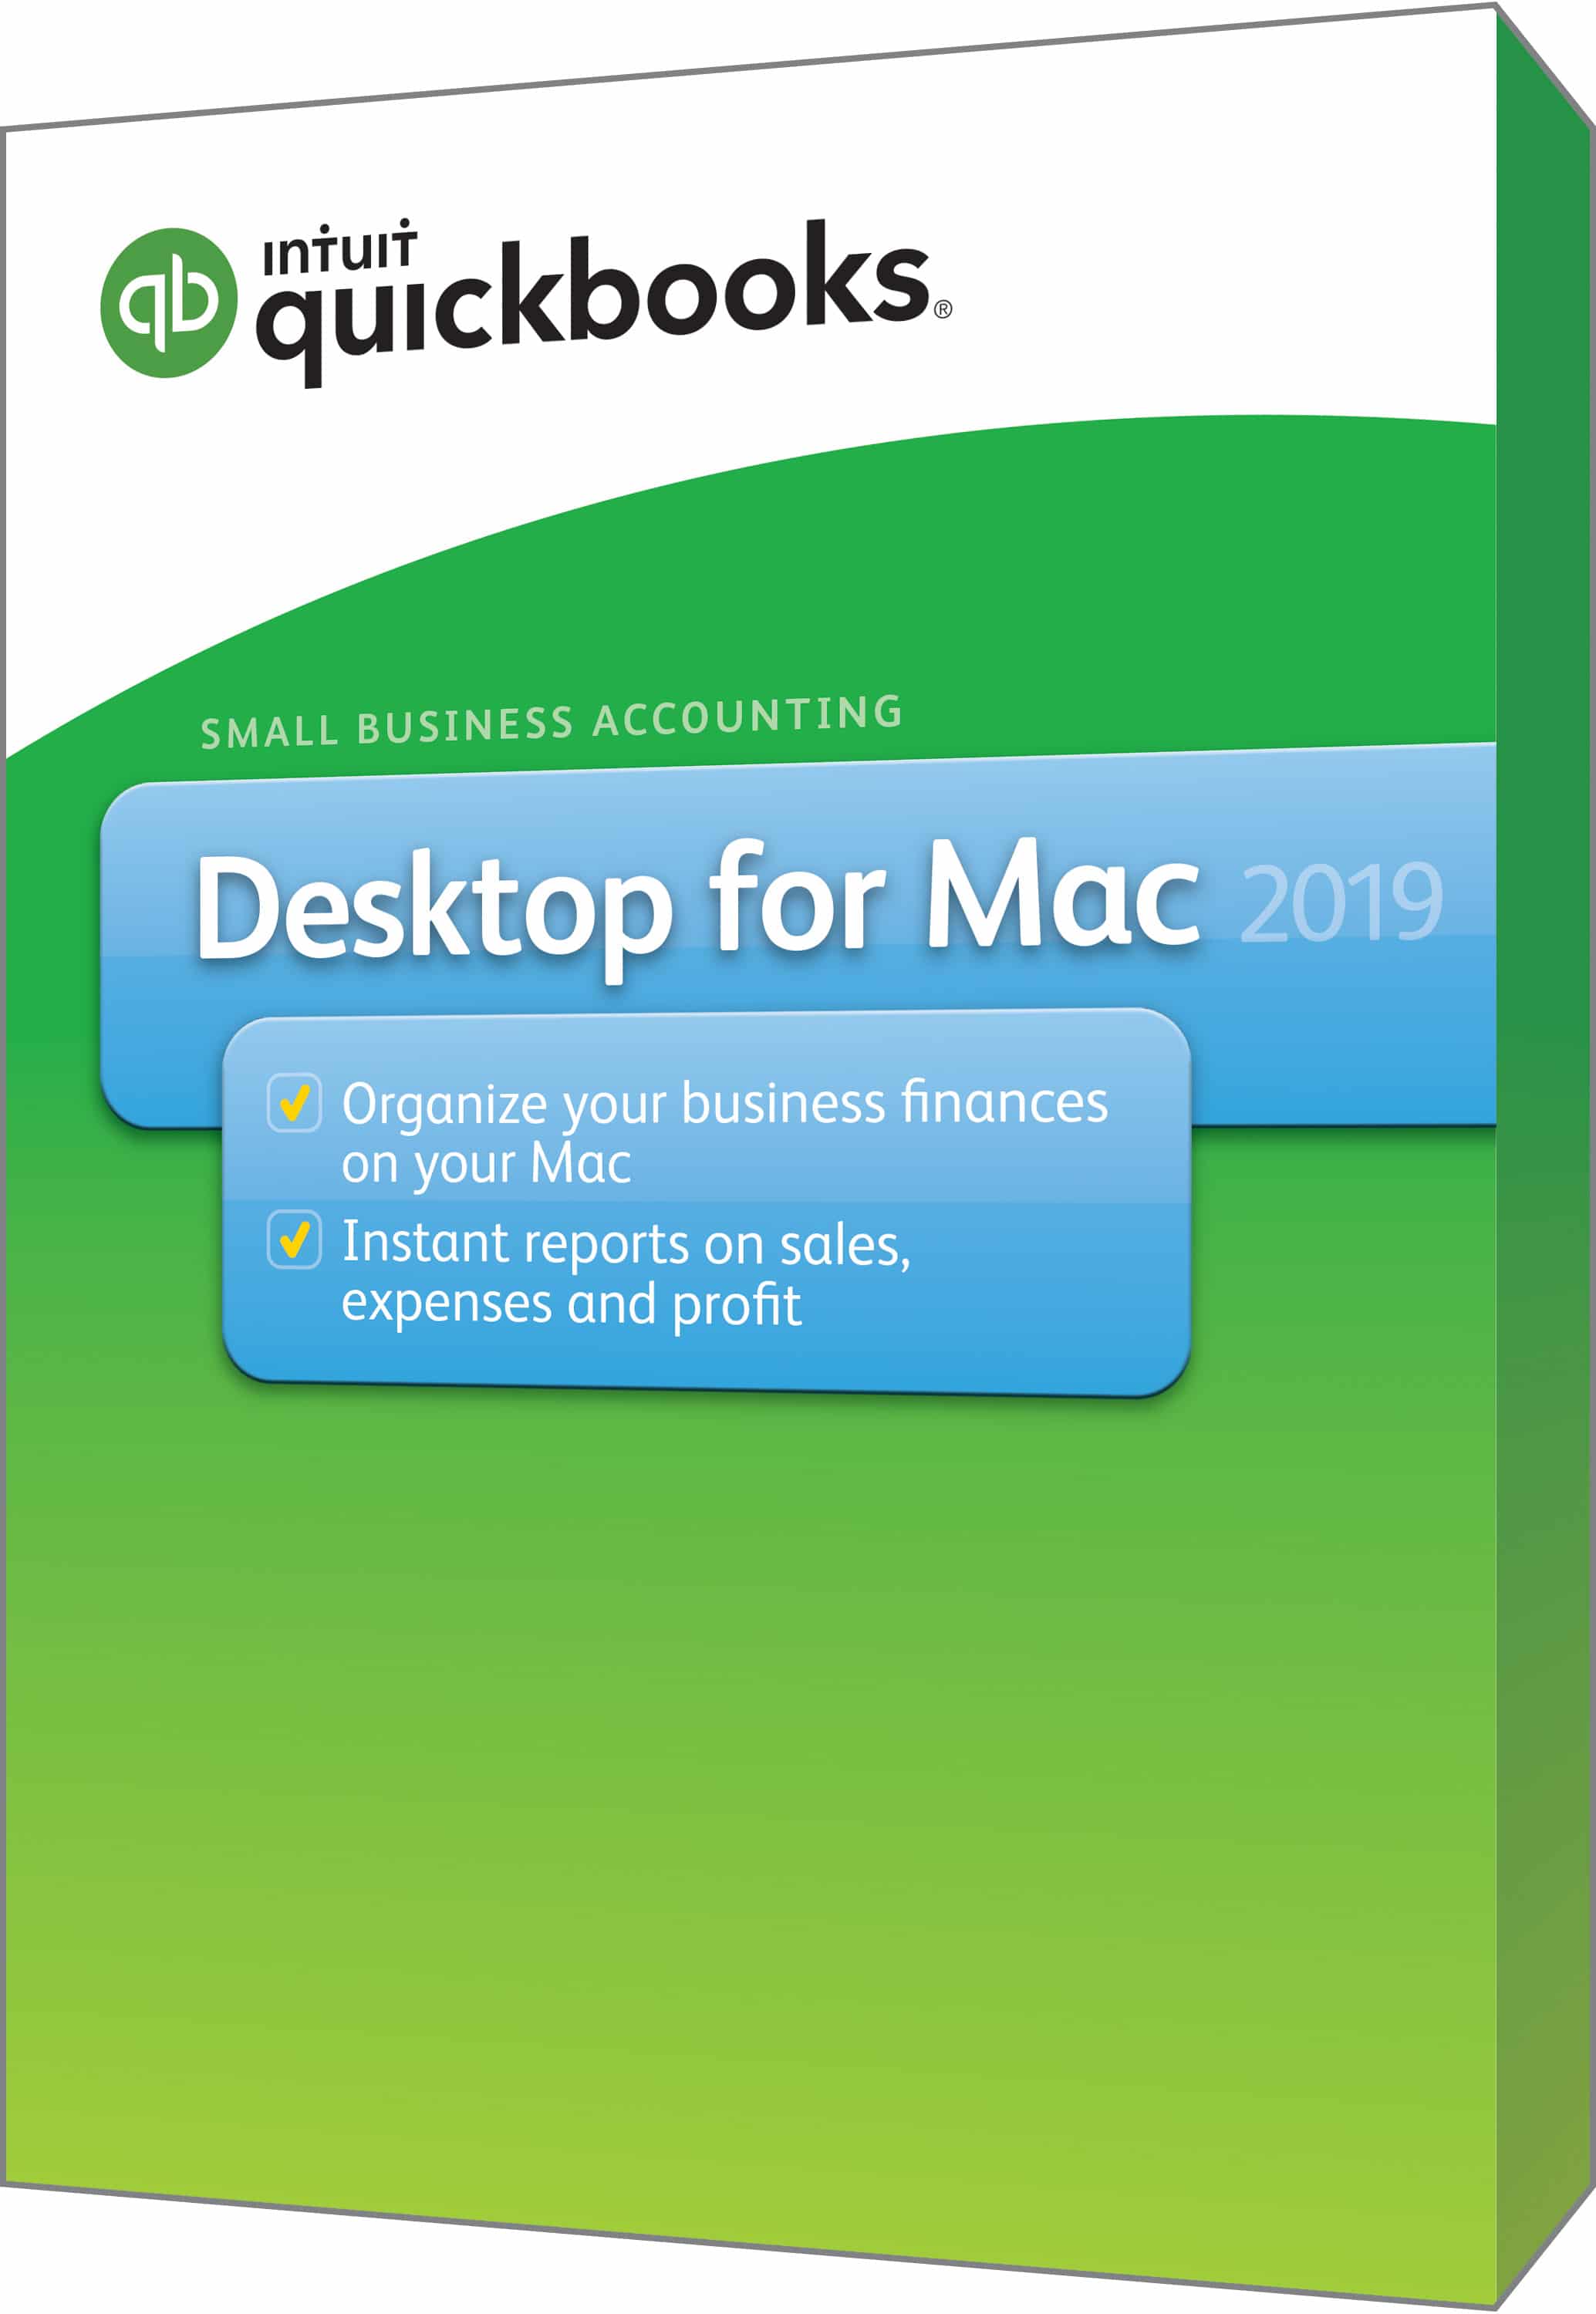 quickbooks for mac download